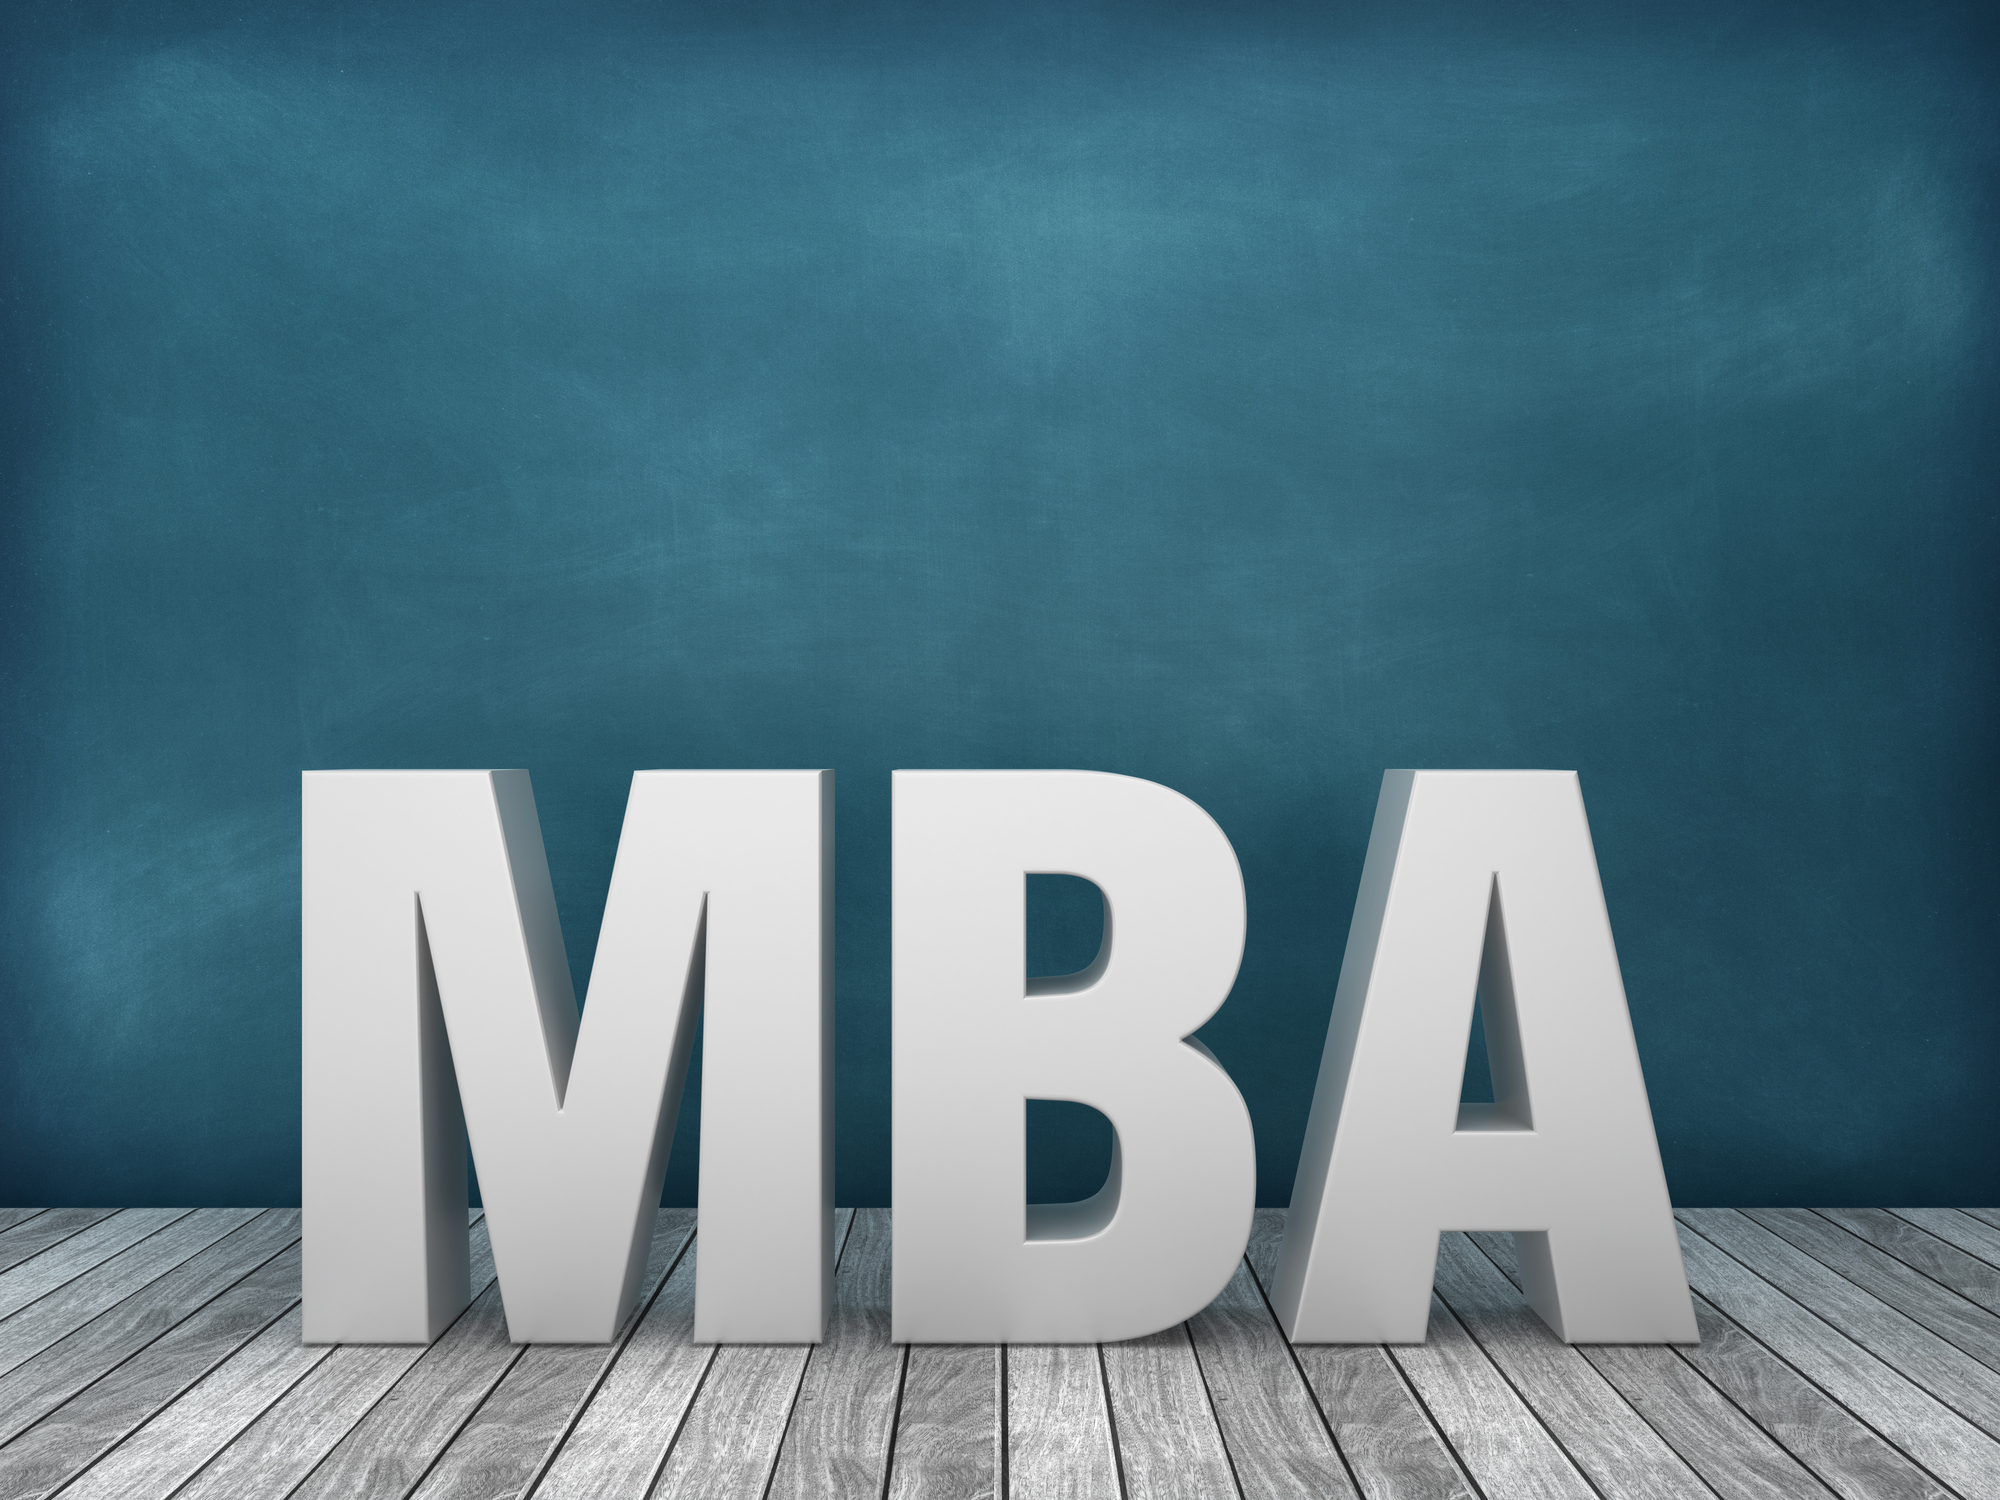 Мба россии. MBA образование. MBA В картинках. Значок MBA. Курсы MBA.